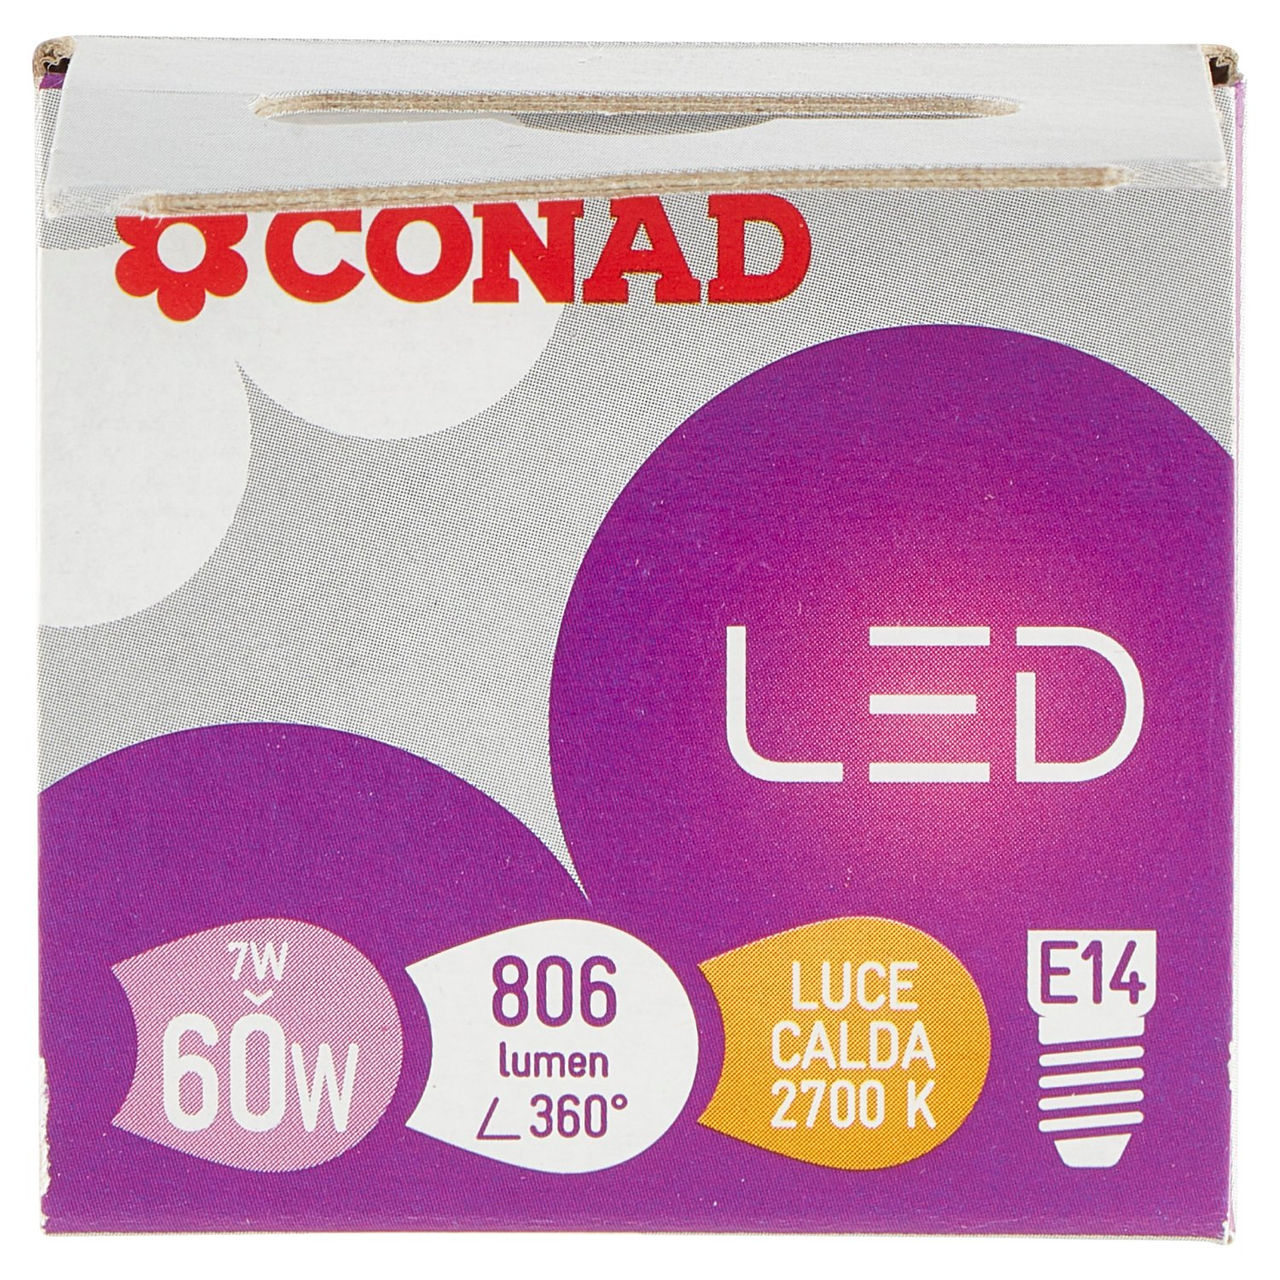 CONAD Led 7W 806 Lumen E14 Luce Calda